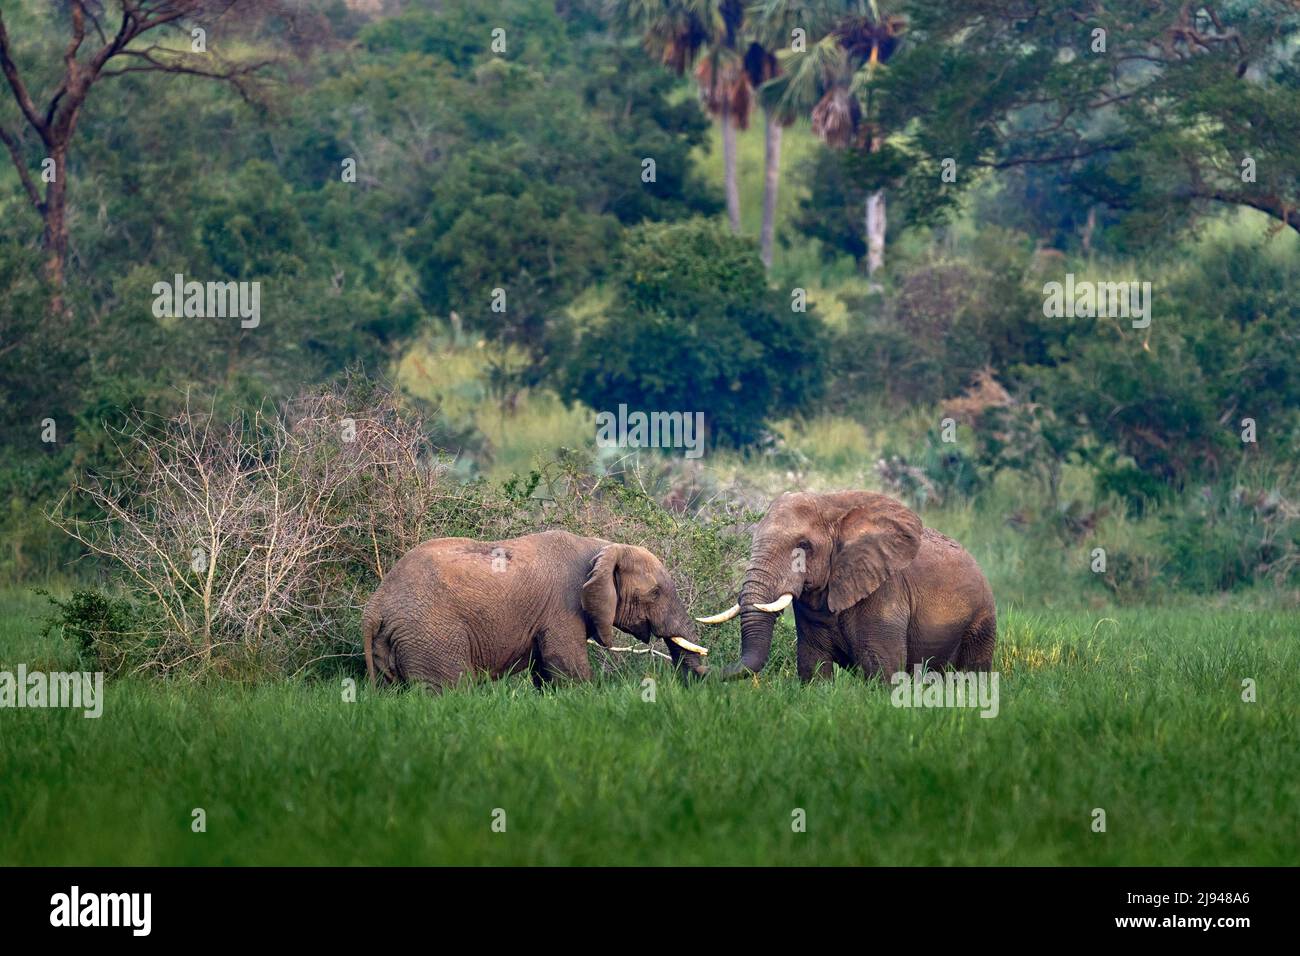 Elephant in rain. Elephant in Murchison Falls NP, Uganda. Big Mammal in the green grass, forest vegetation in the background. Elephant watewr walk in Stock Photo